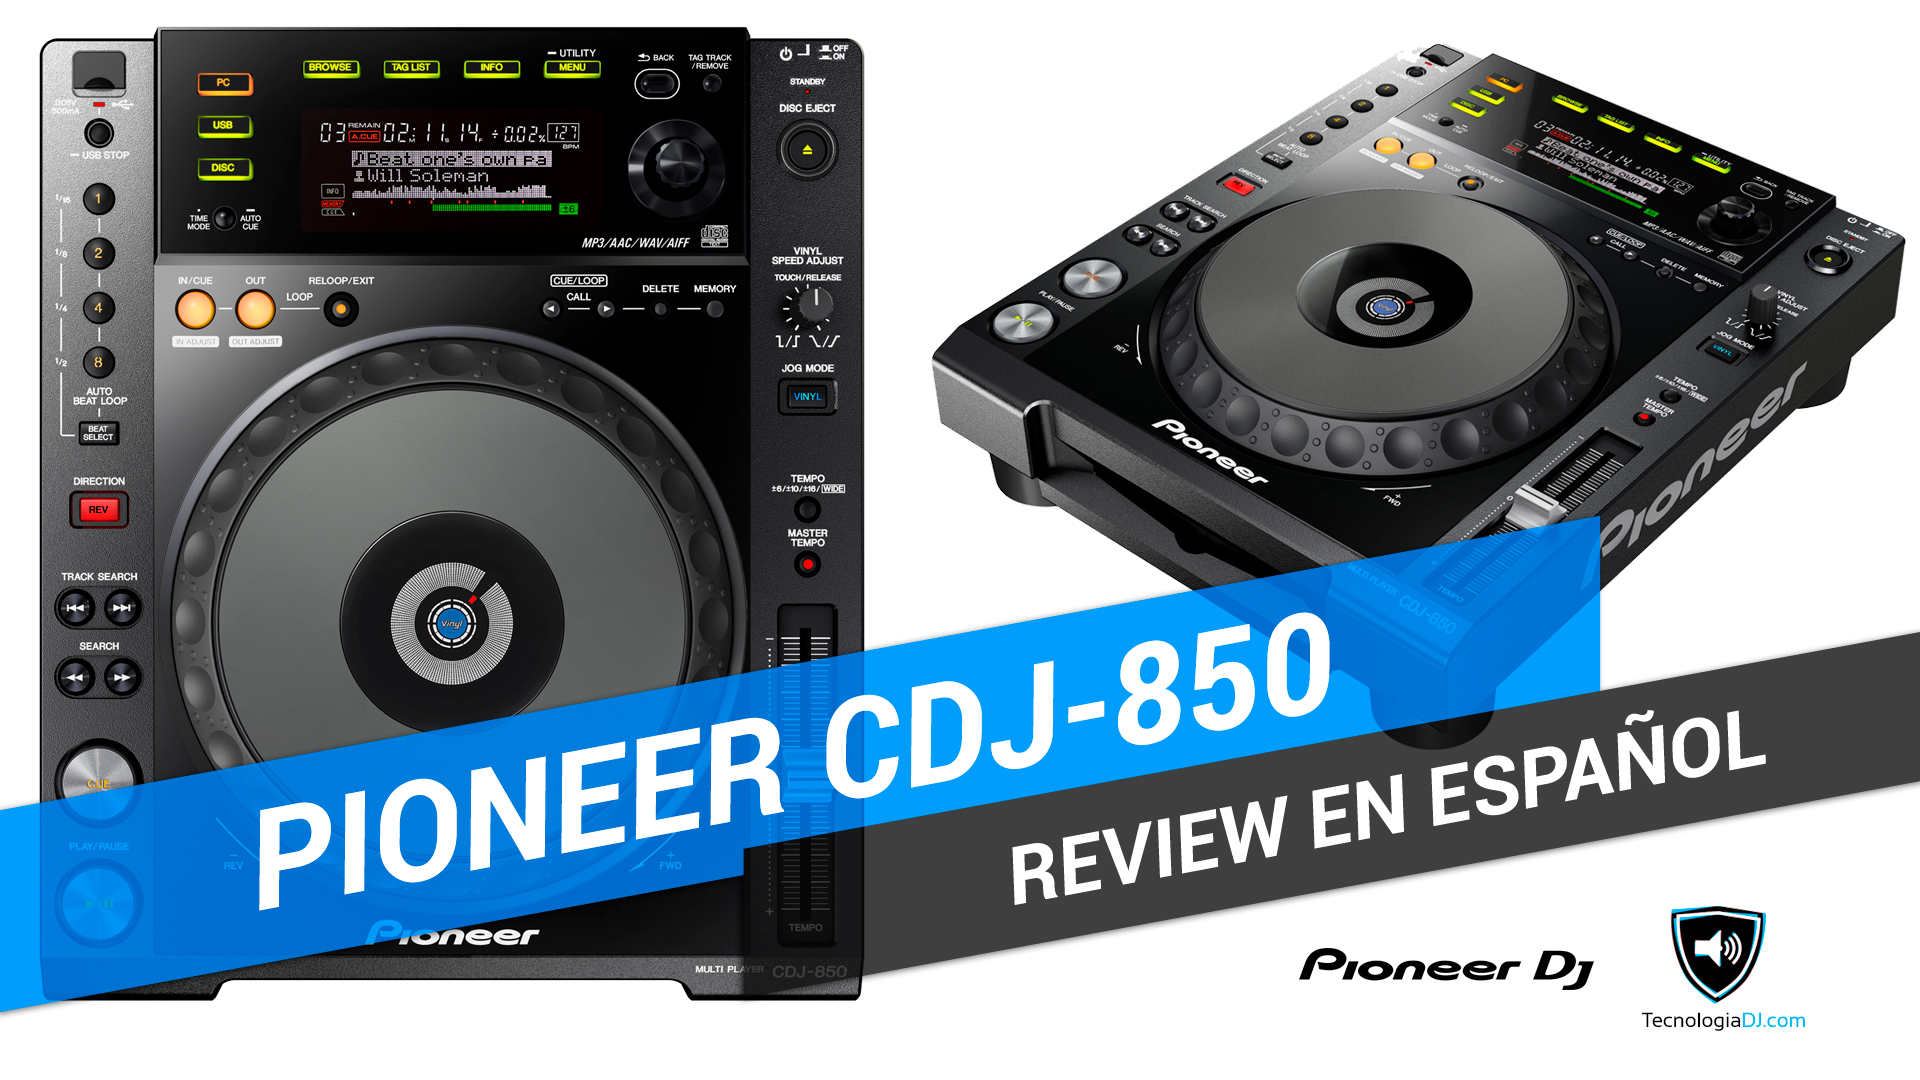 Review reproductor Pioneer CDJ-850